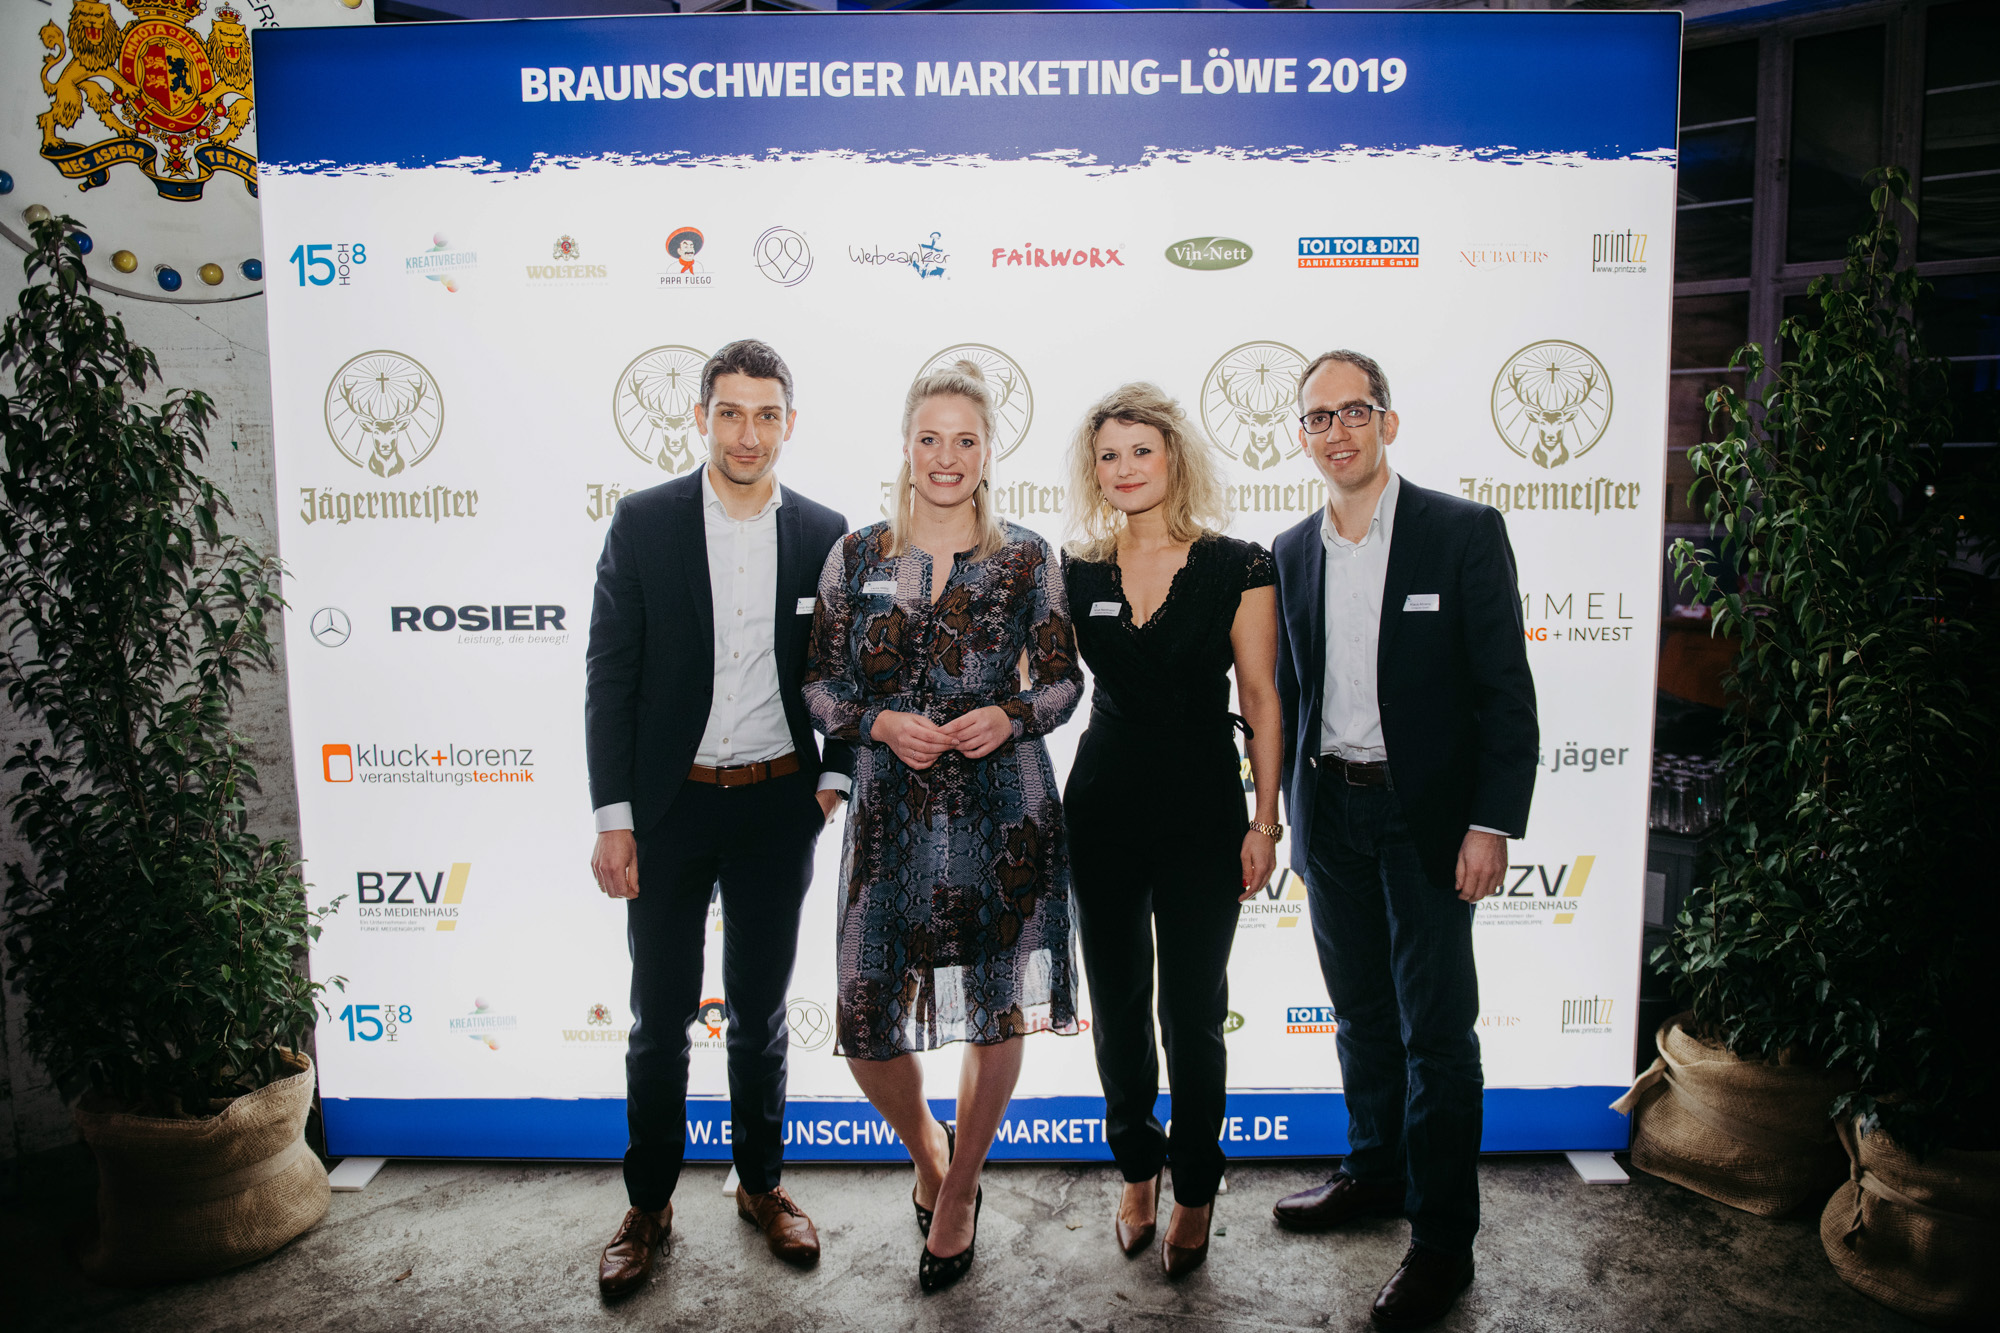 MCBS Marketing-Loewe 2019 small 56